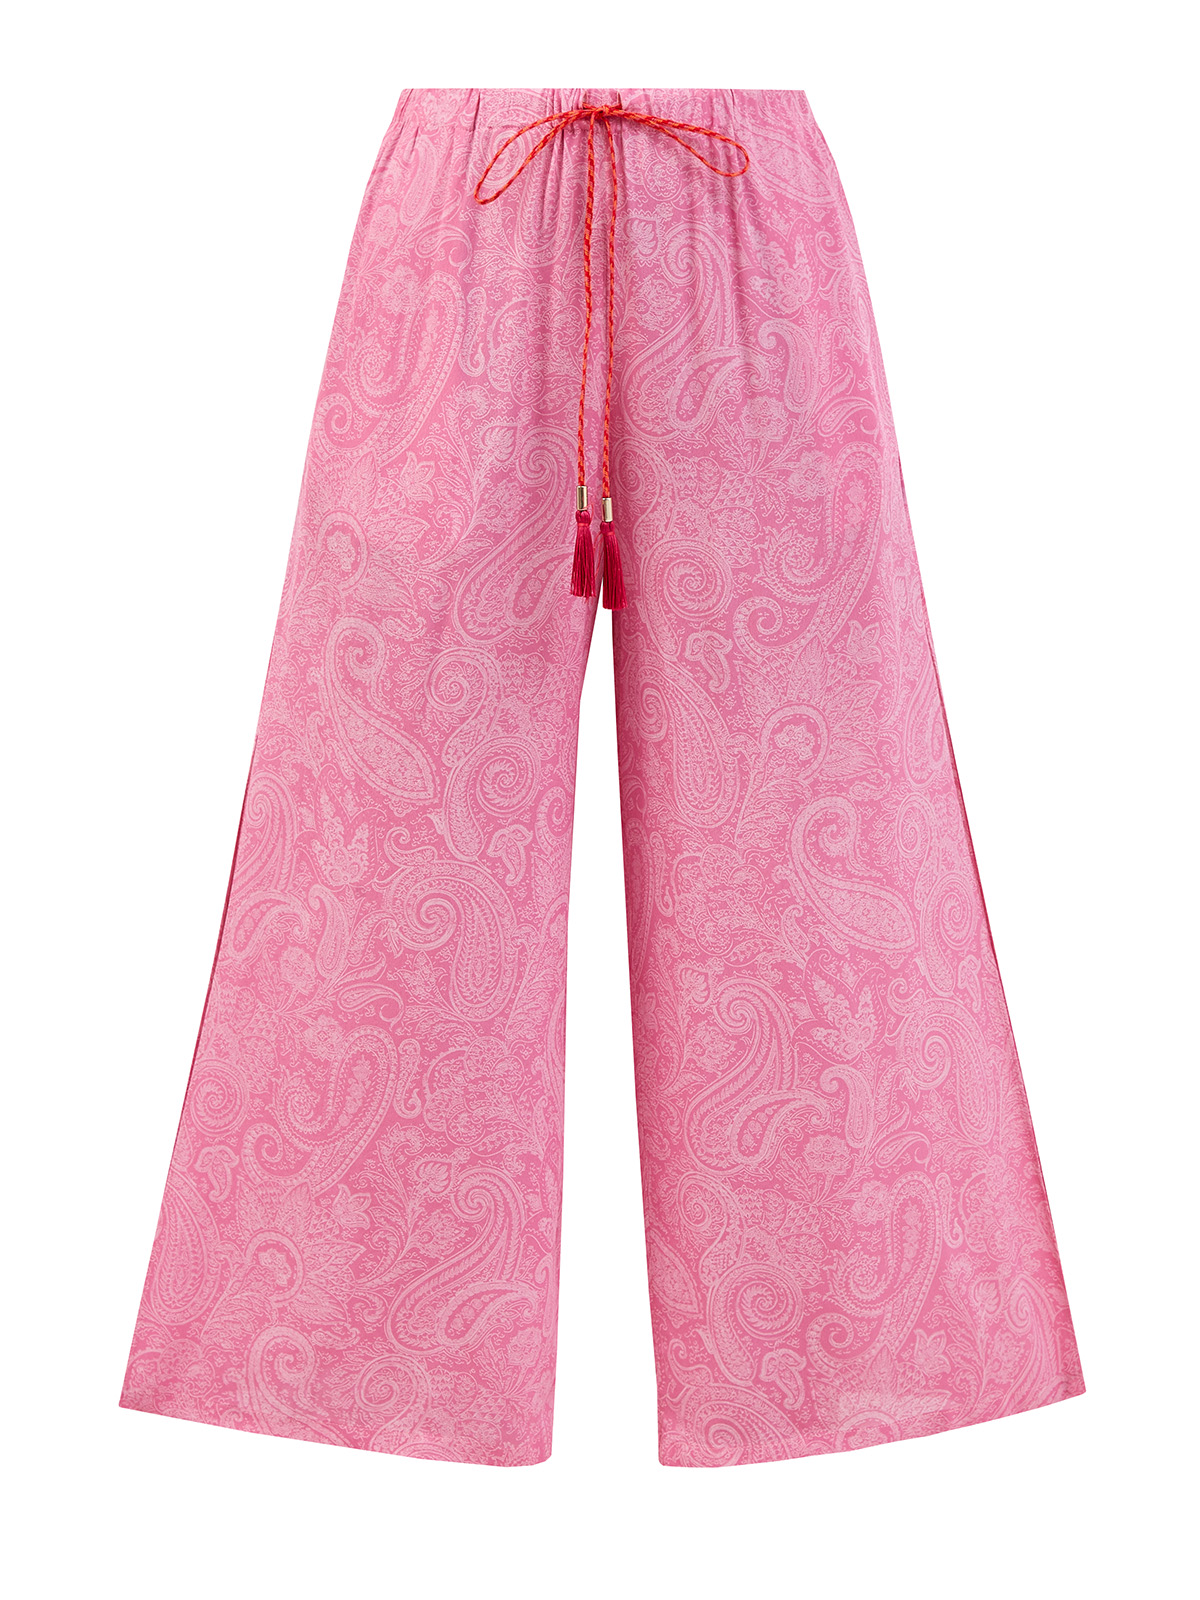 Легкие брюки с разрезами и флористическим паттерном ETRO розового цвета